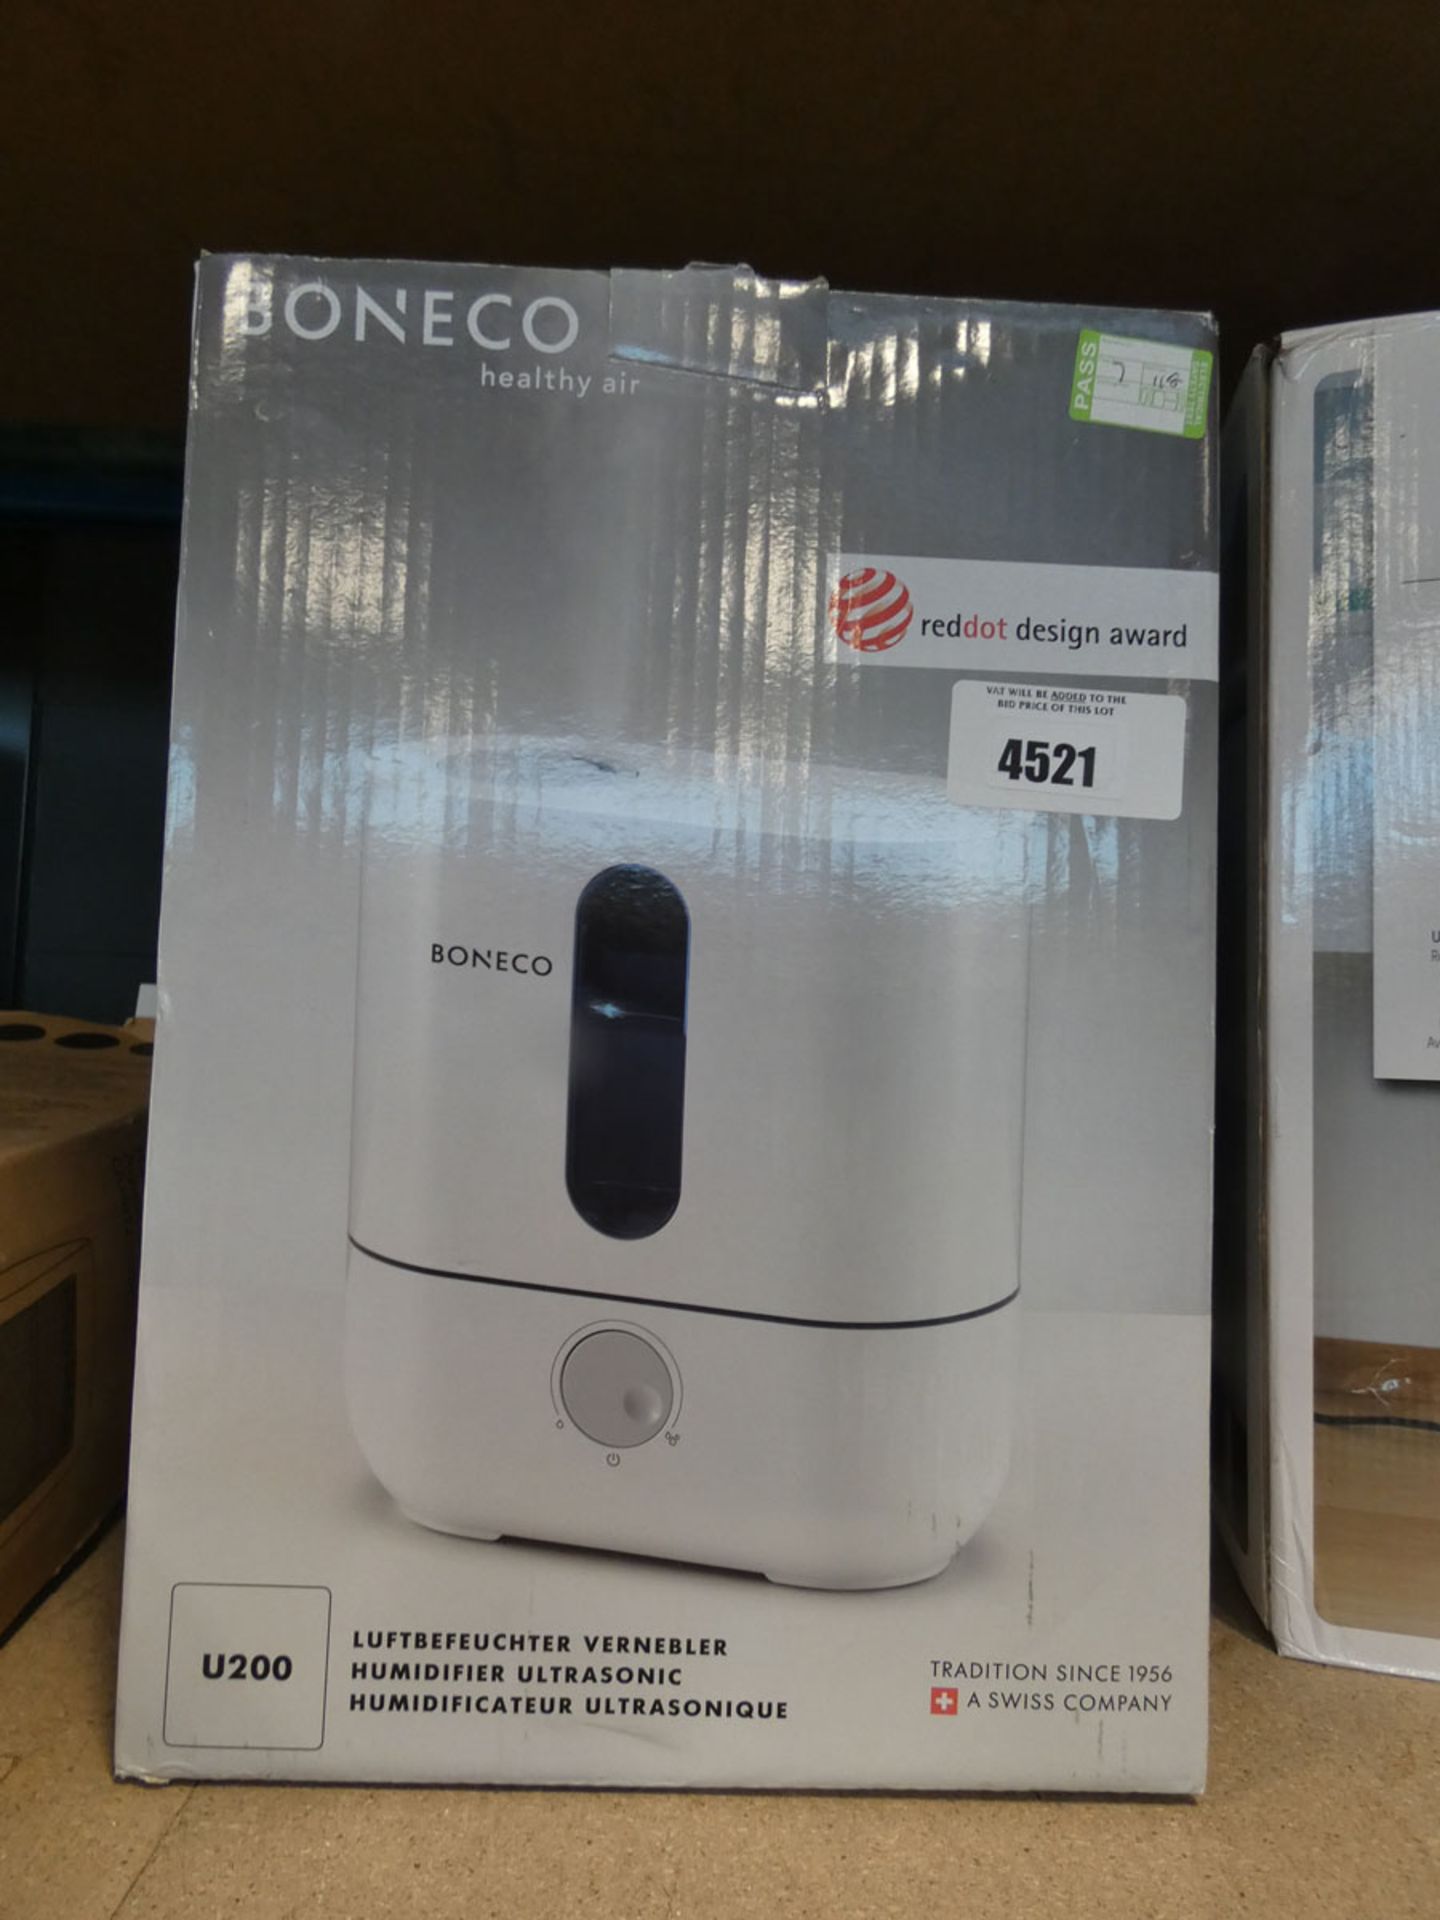 Boneco healthy air humidifier, boxed